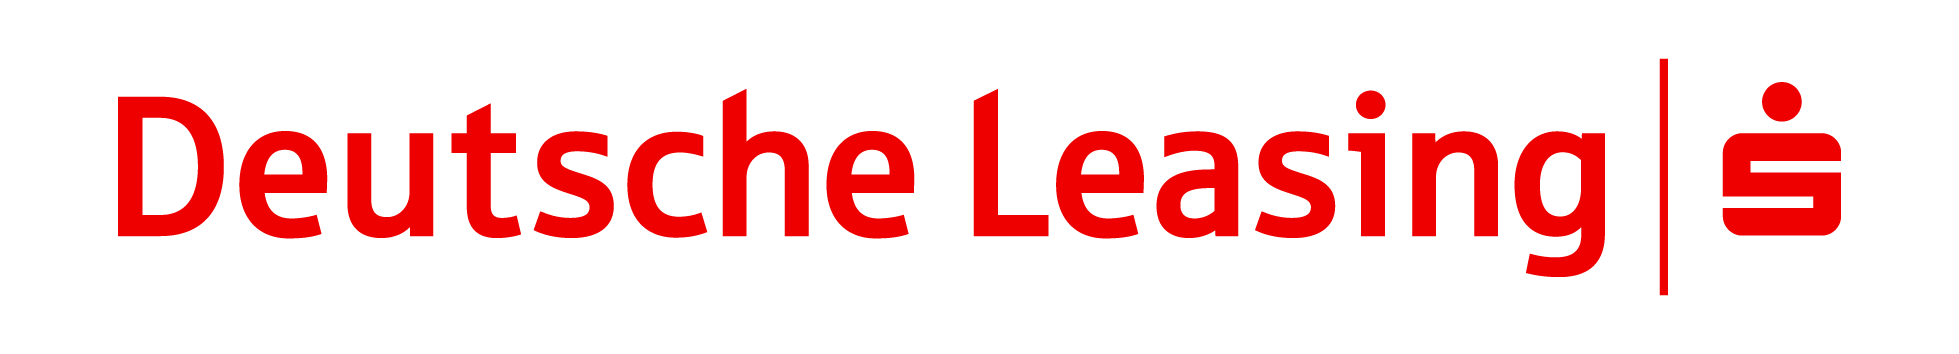 deutsche leasing logo